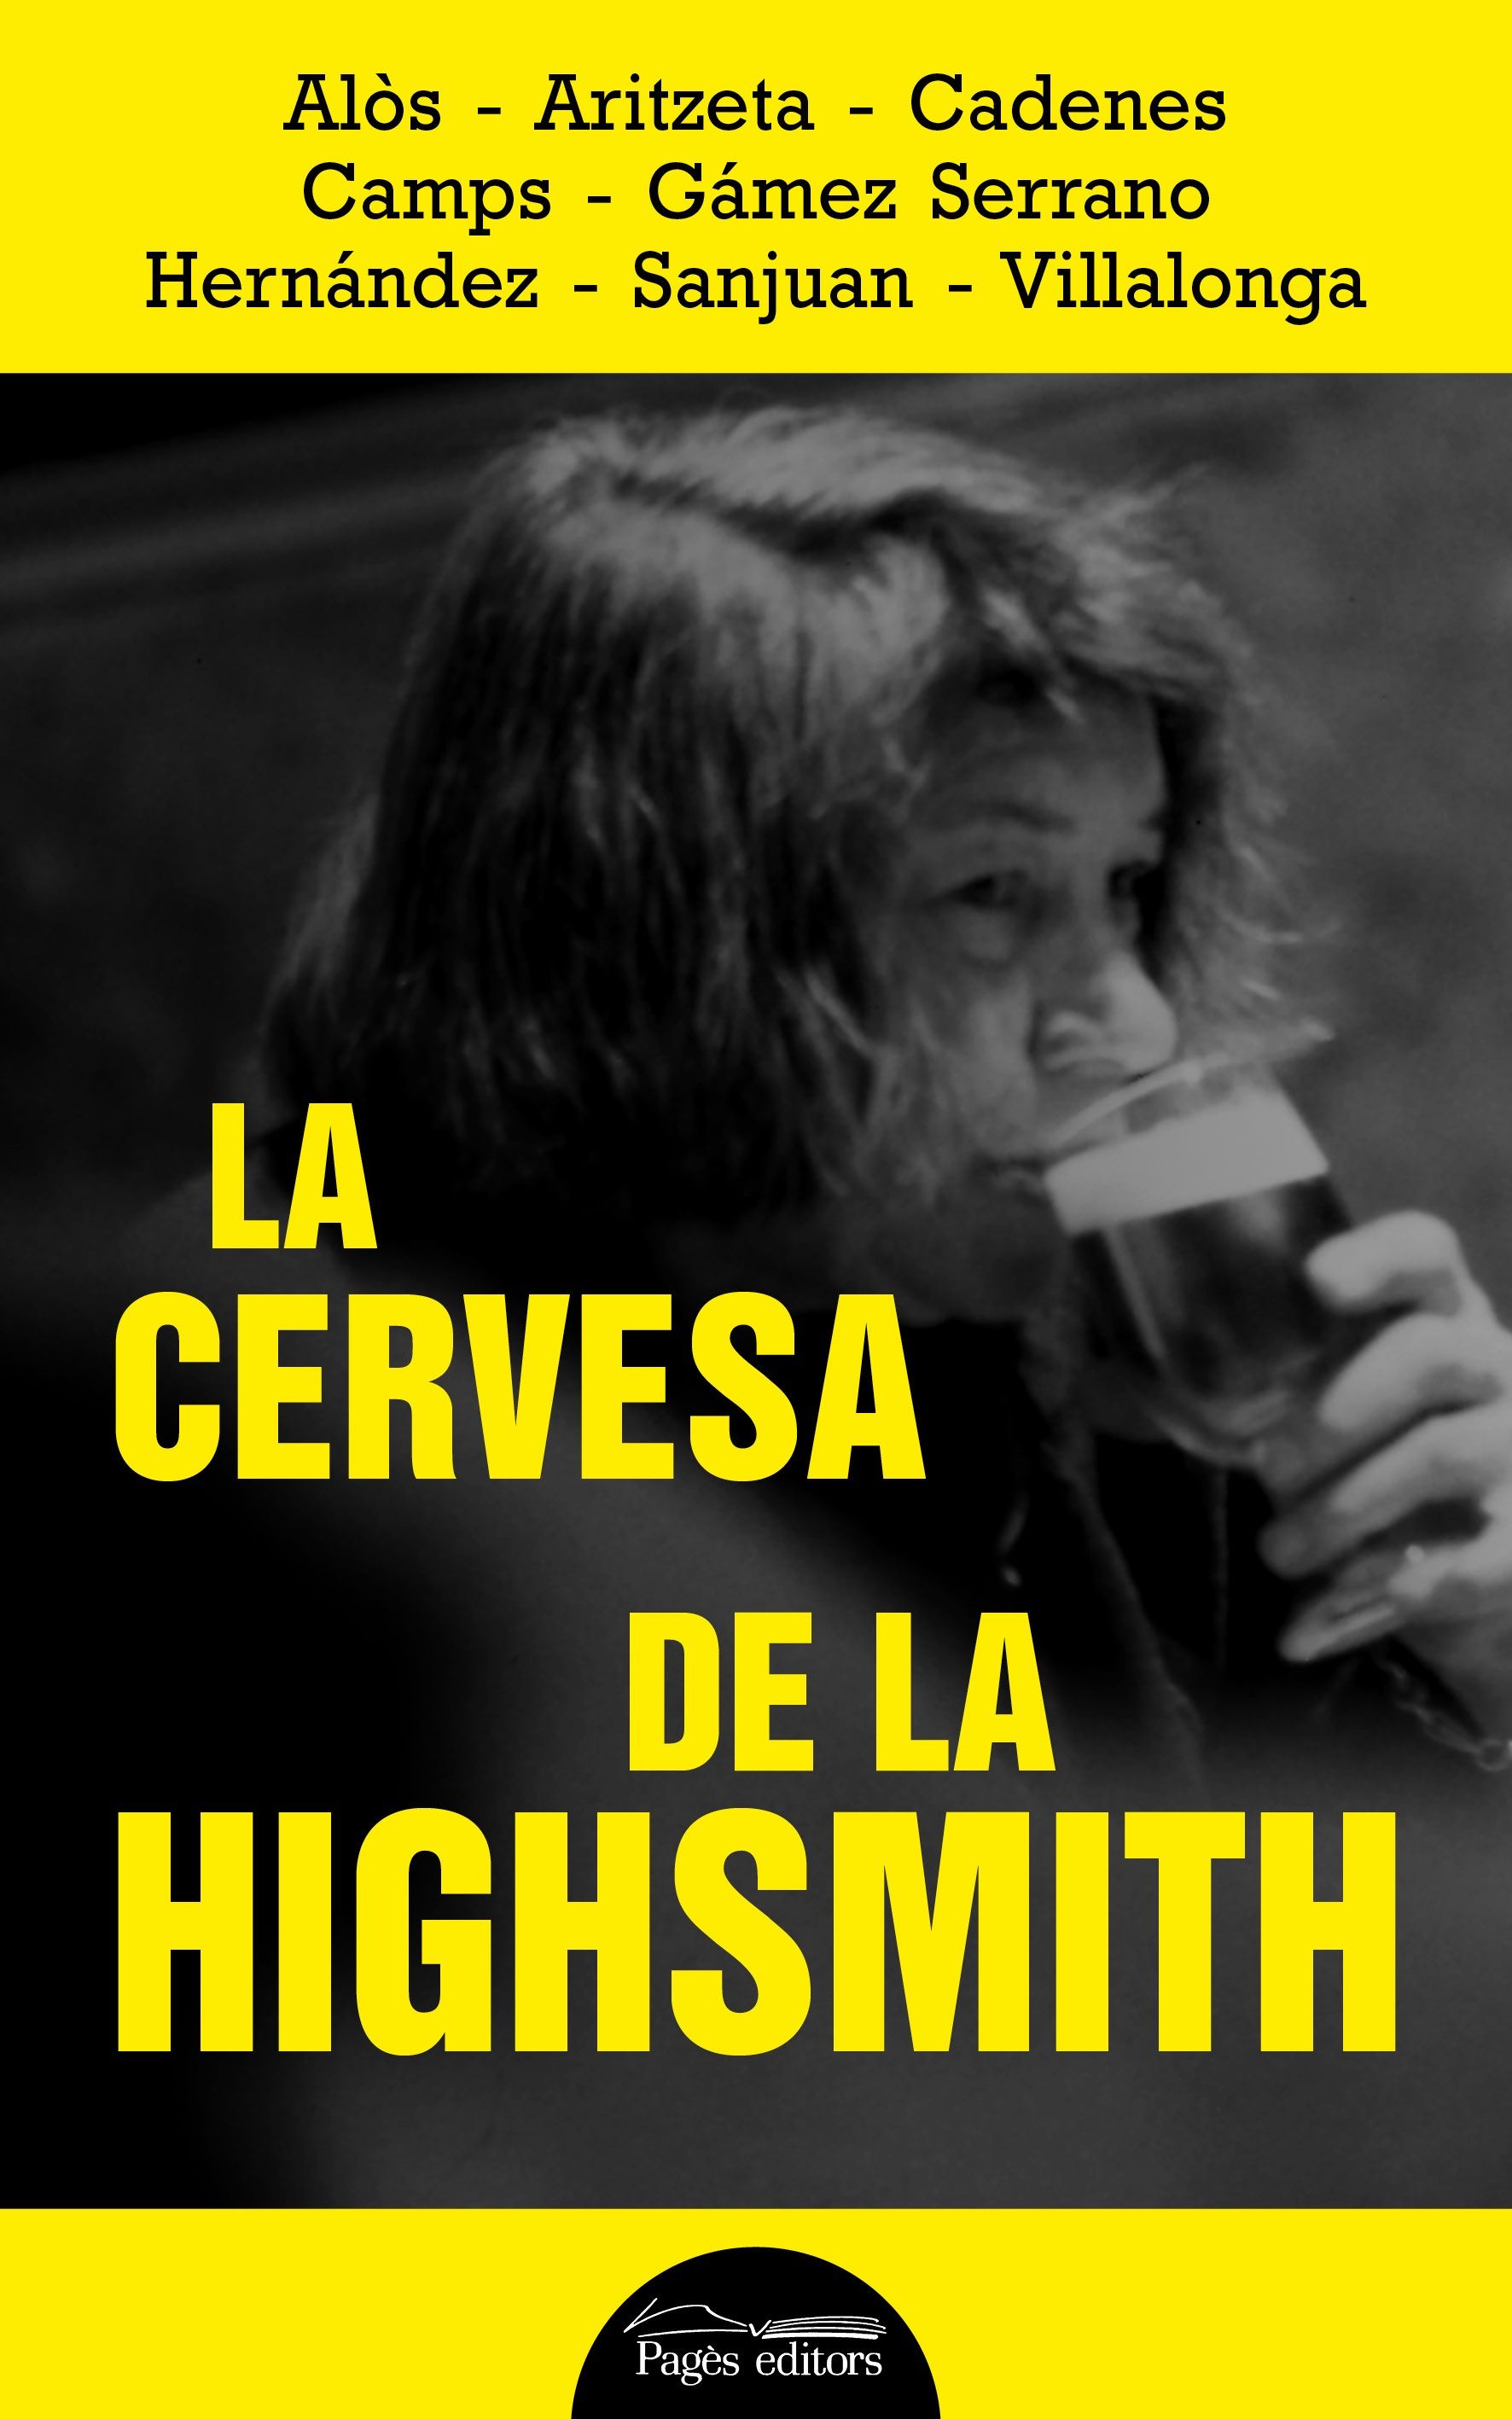 EuropaPress 3529115 portada antologia cervesa highsmith